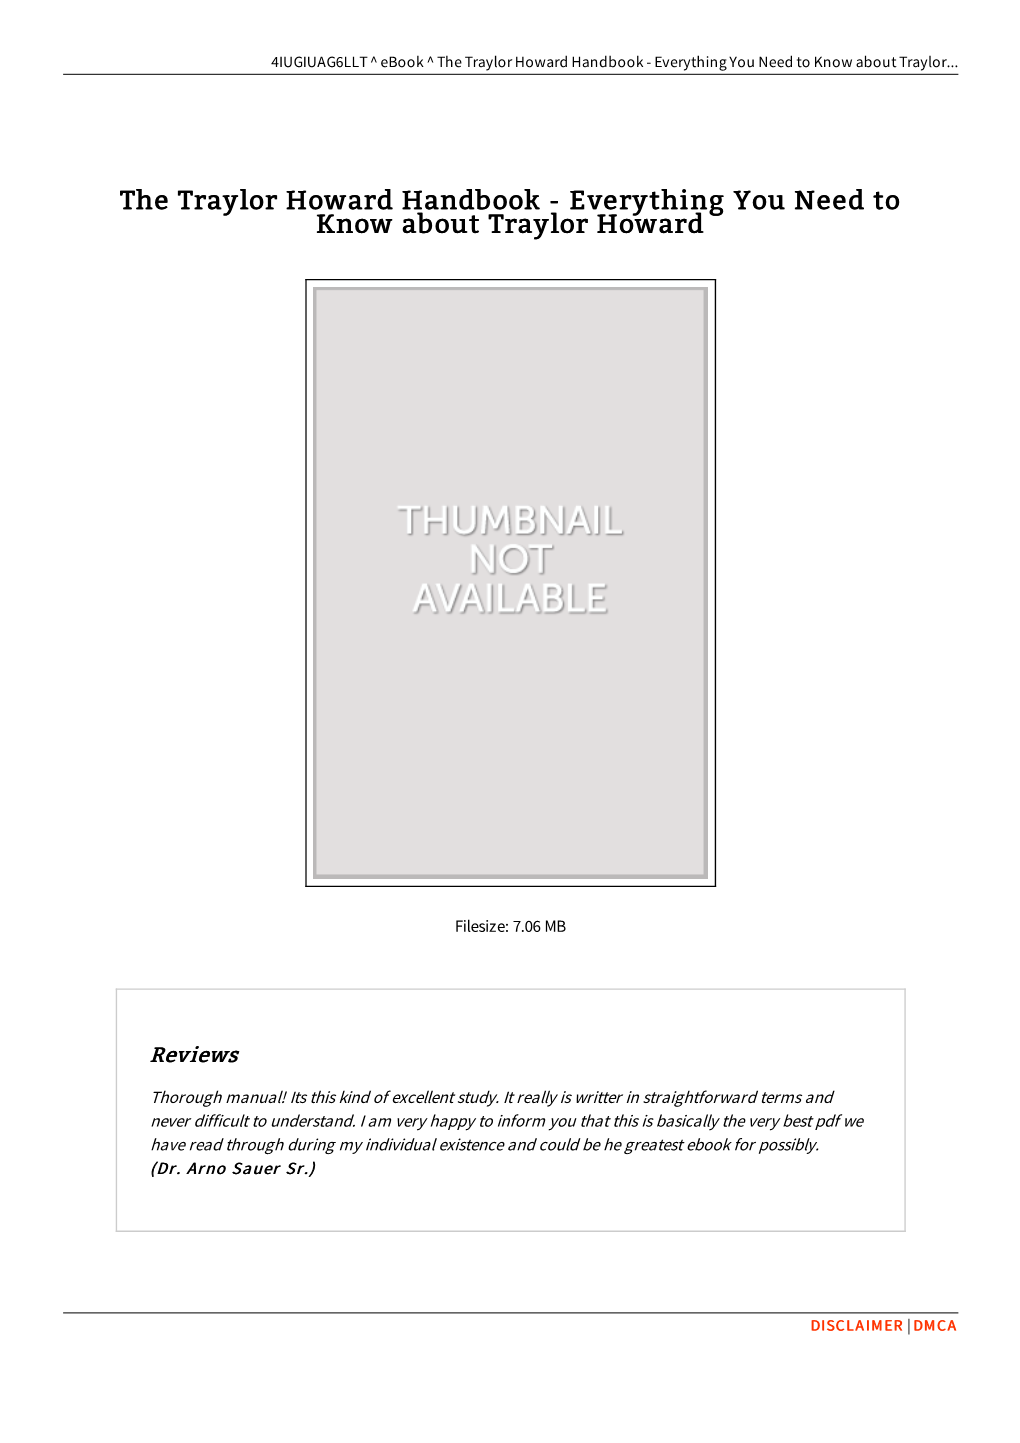 Read Doc the Traylor Howard Handbook